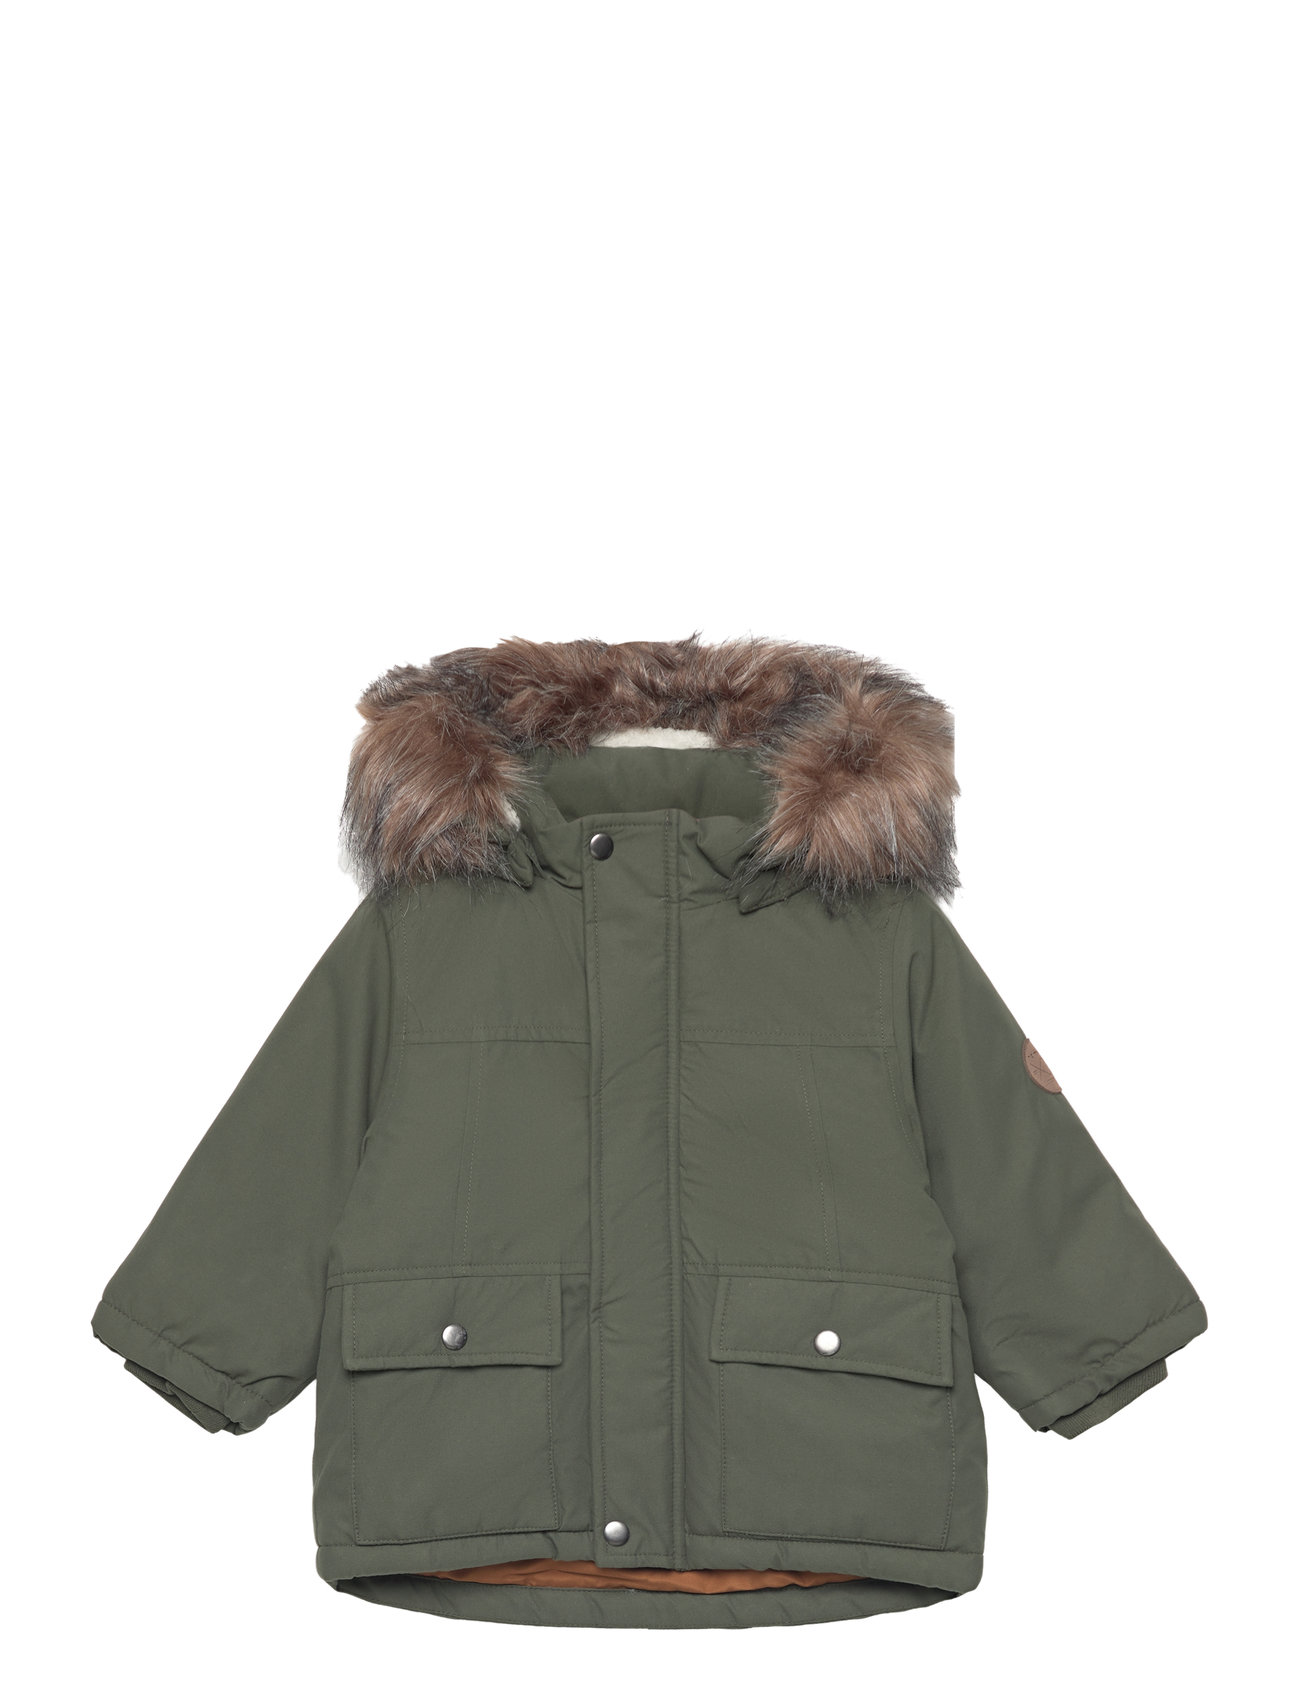 name Pb at Jacket Fo Booztlet jackets – shop Nmmmarlin Parka – it